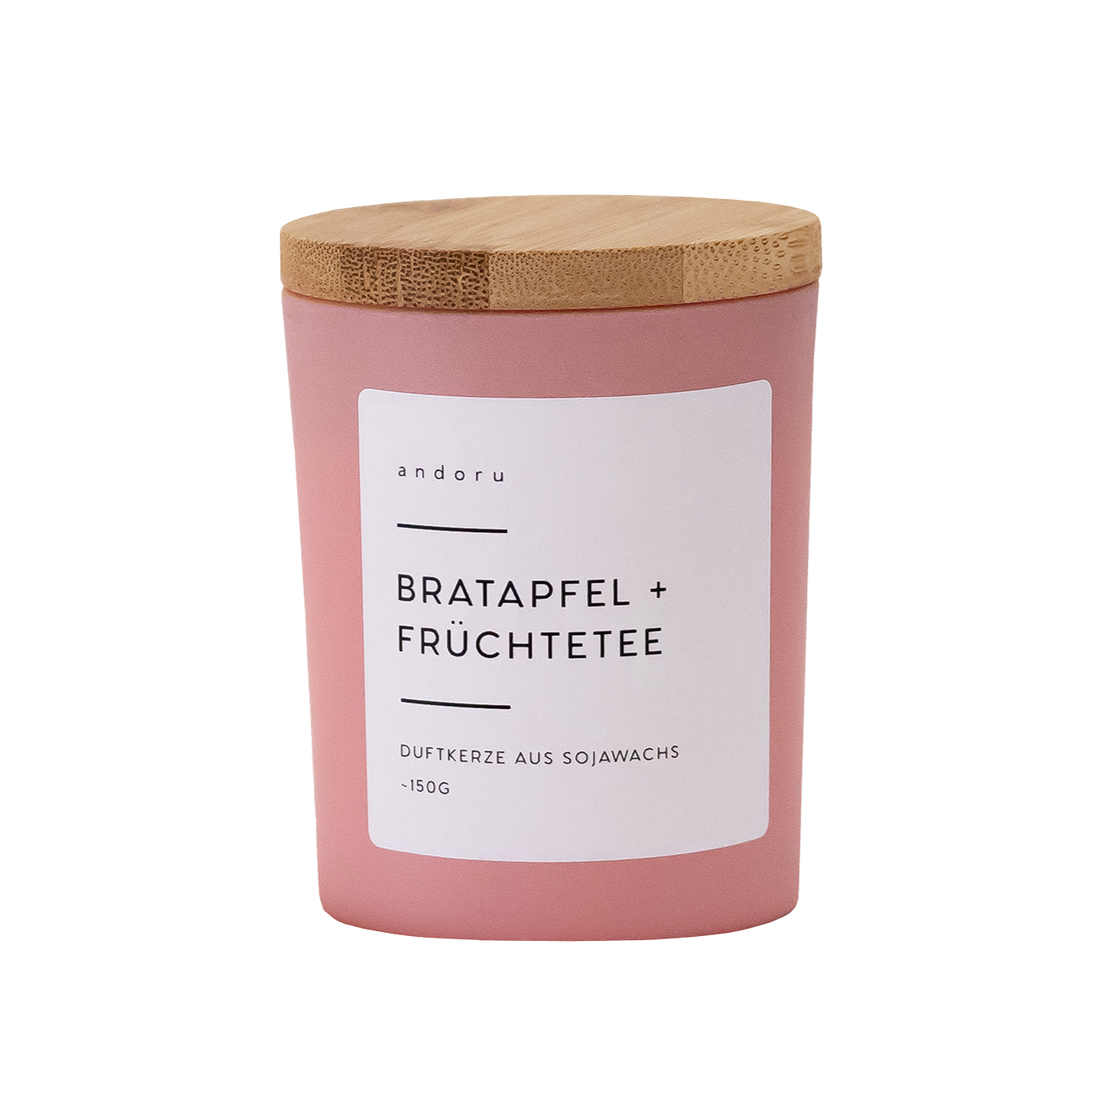 Bratapfel + Früchtetee - andoru Duftkerze mit Holzdeckel